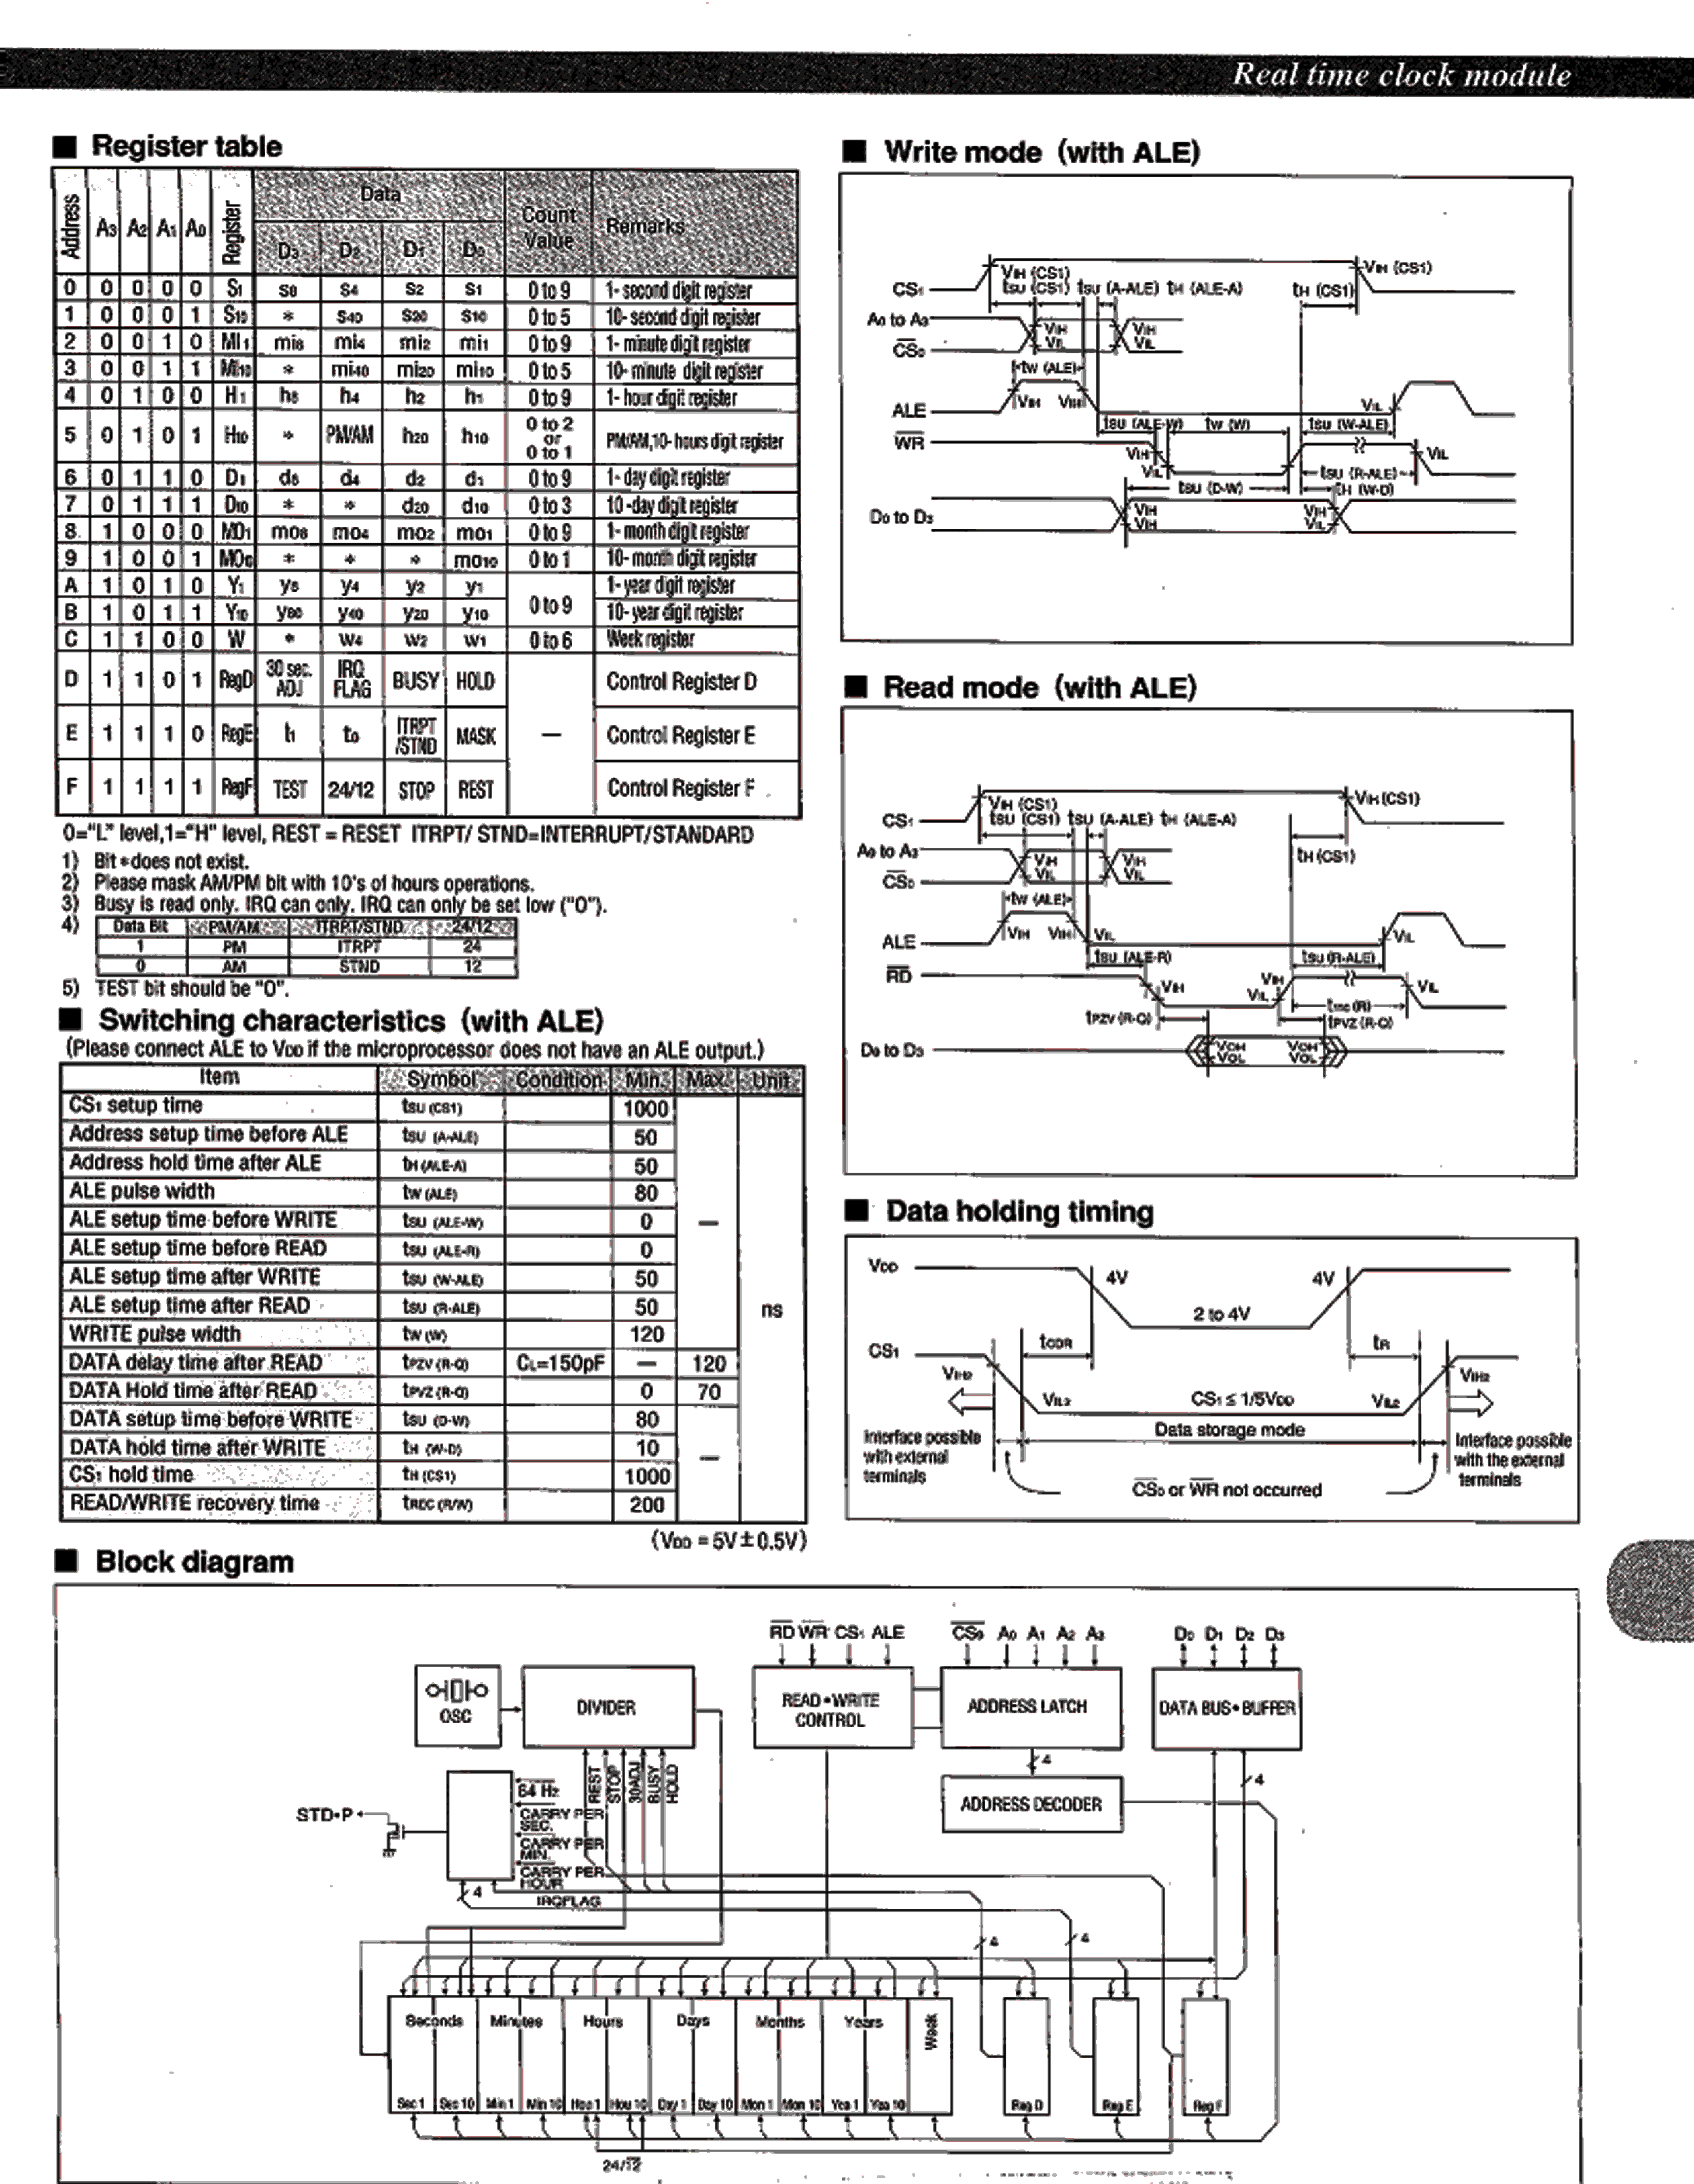 Даташит RTC-72421 - Real time clock module(4-bit REAL TIME CLOCK MODULE) страница 2